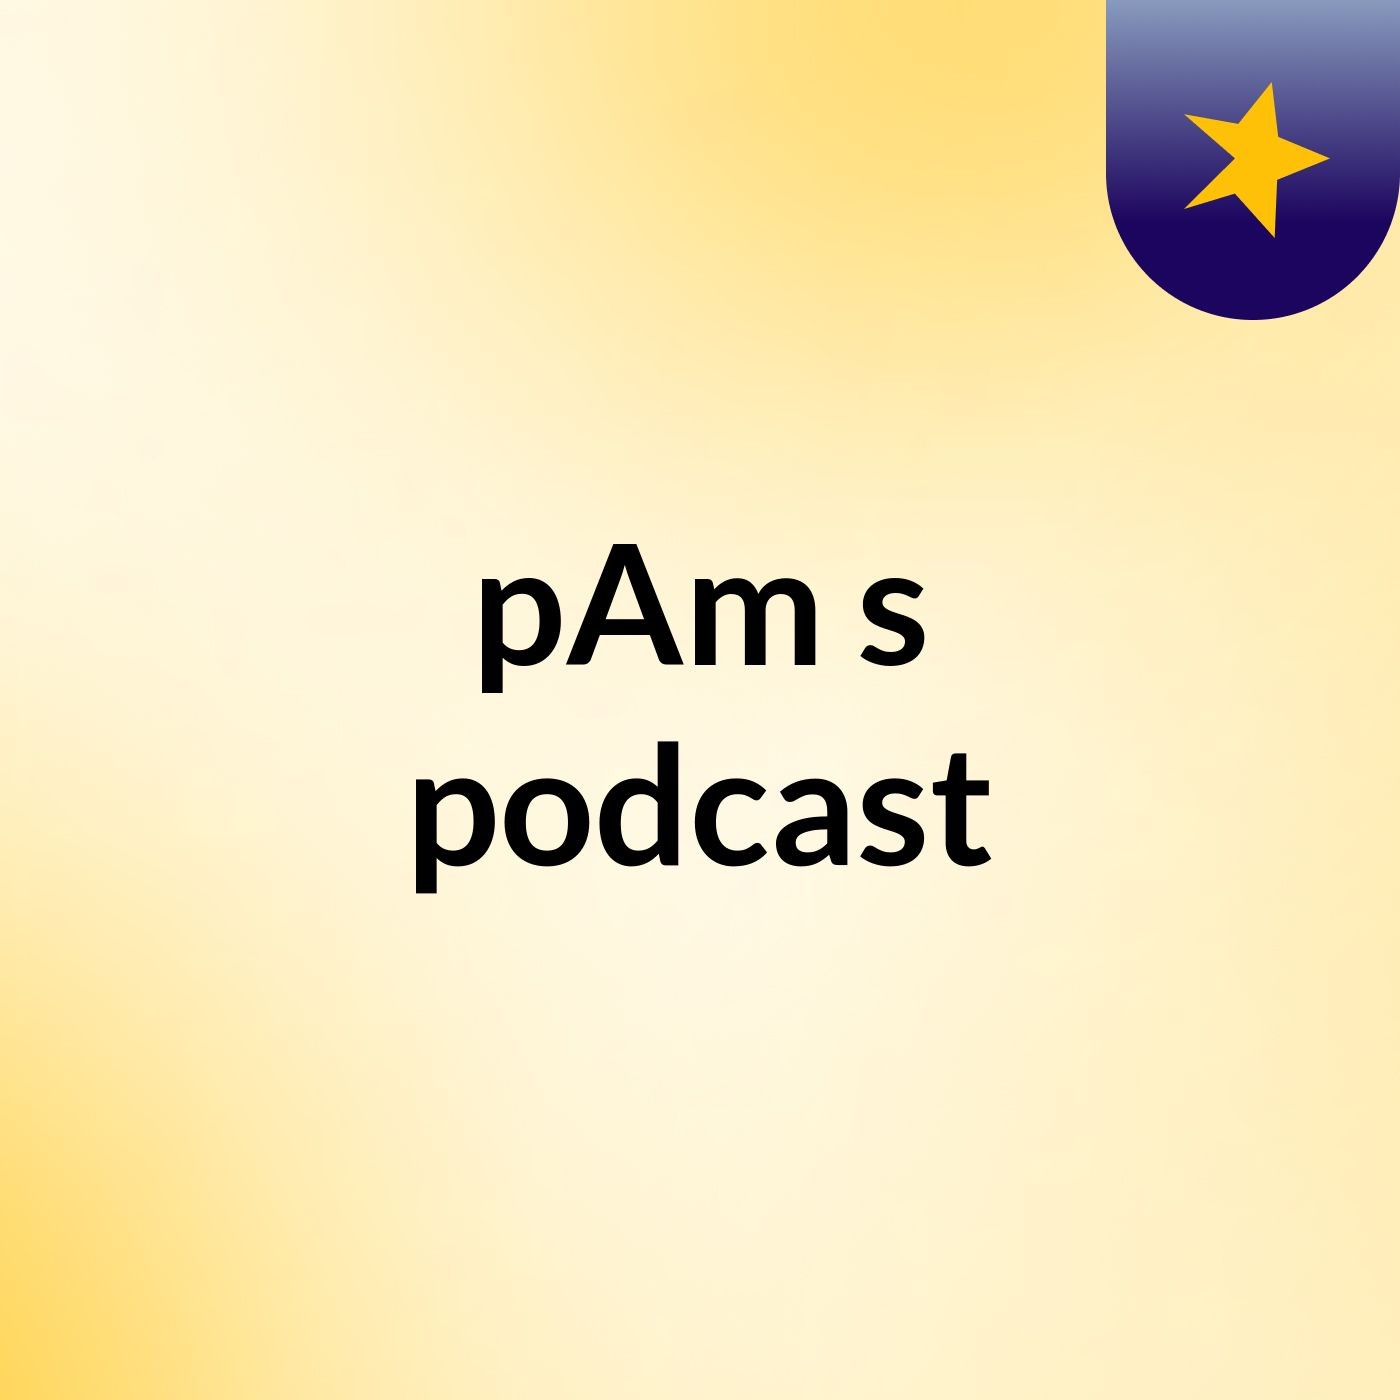 pAm's podcast